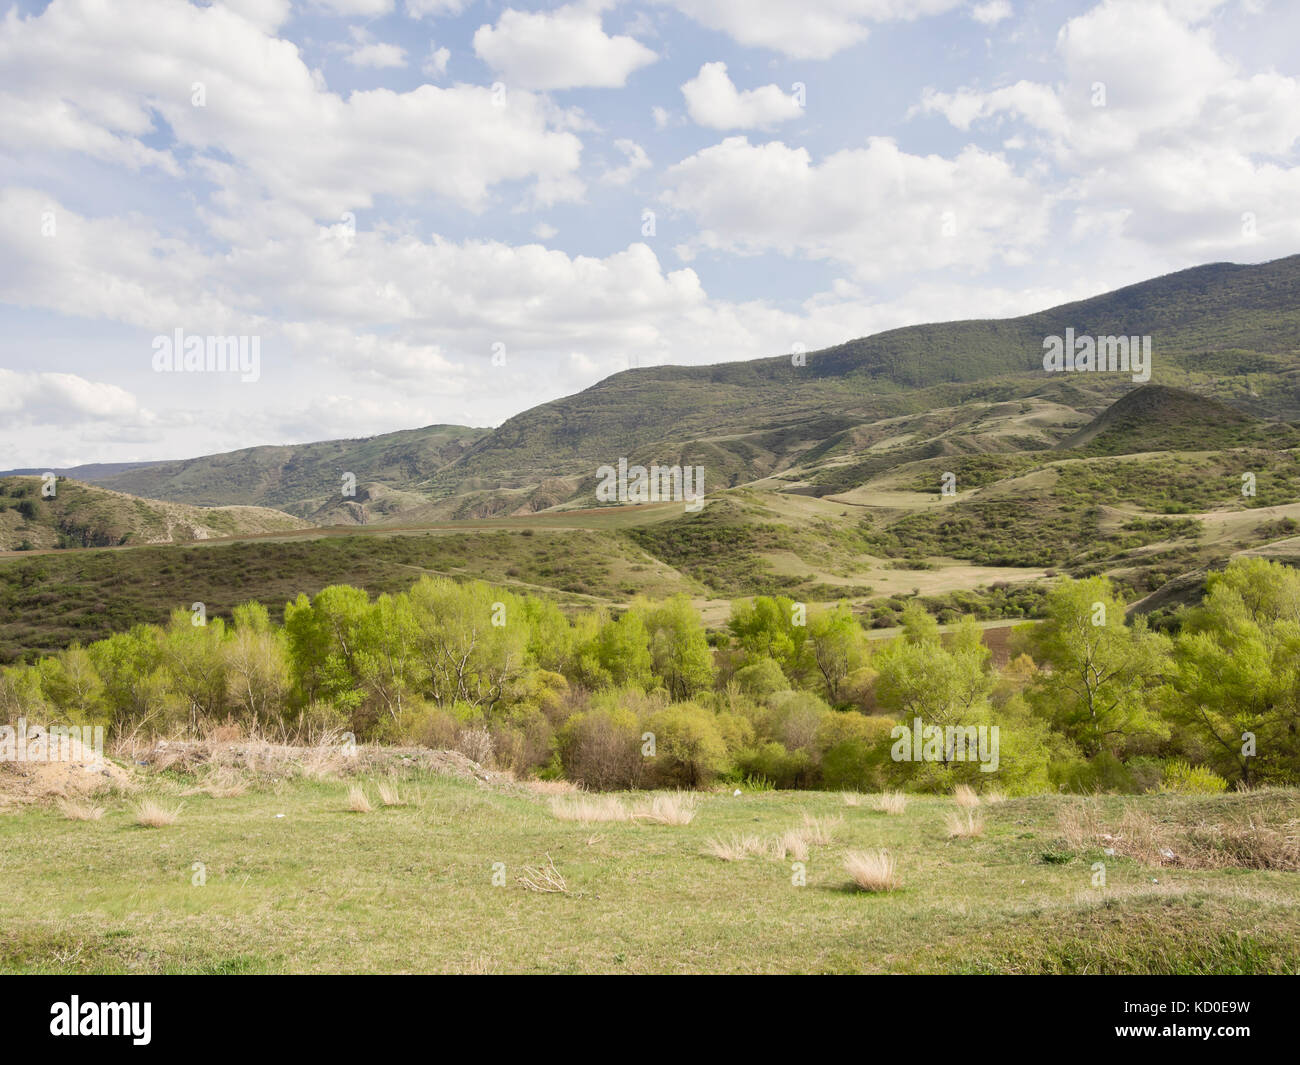 Landscapes and farmland surrounding the small village of Rustavi, Samtskhe-Javakheti province, southern Georgia Stock Photo